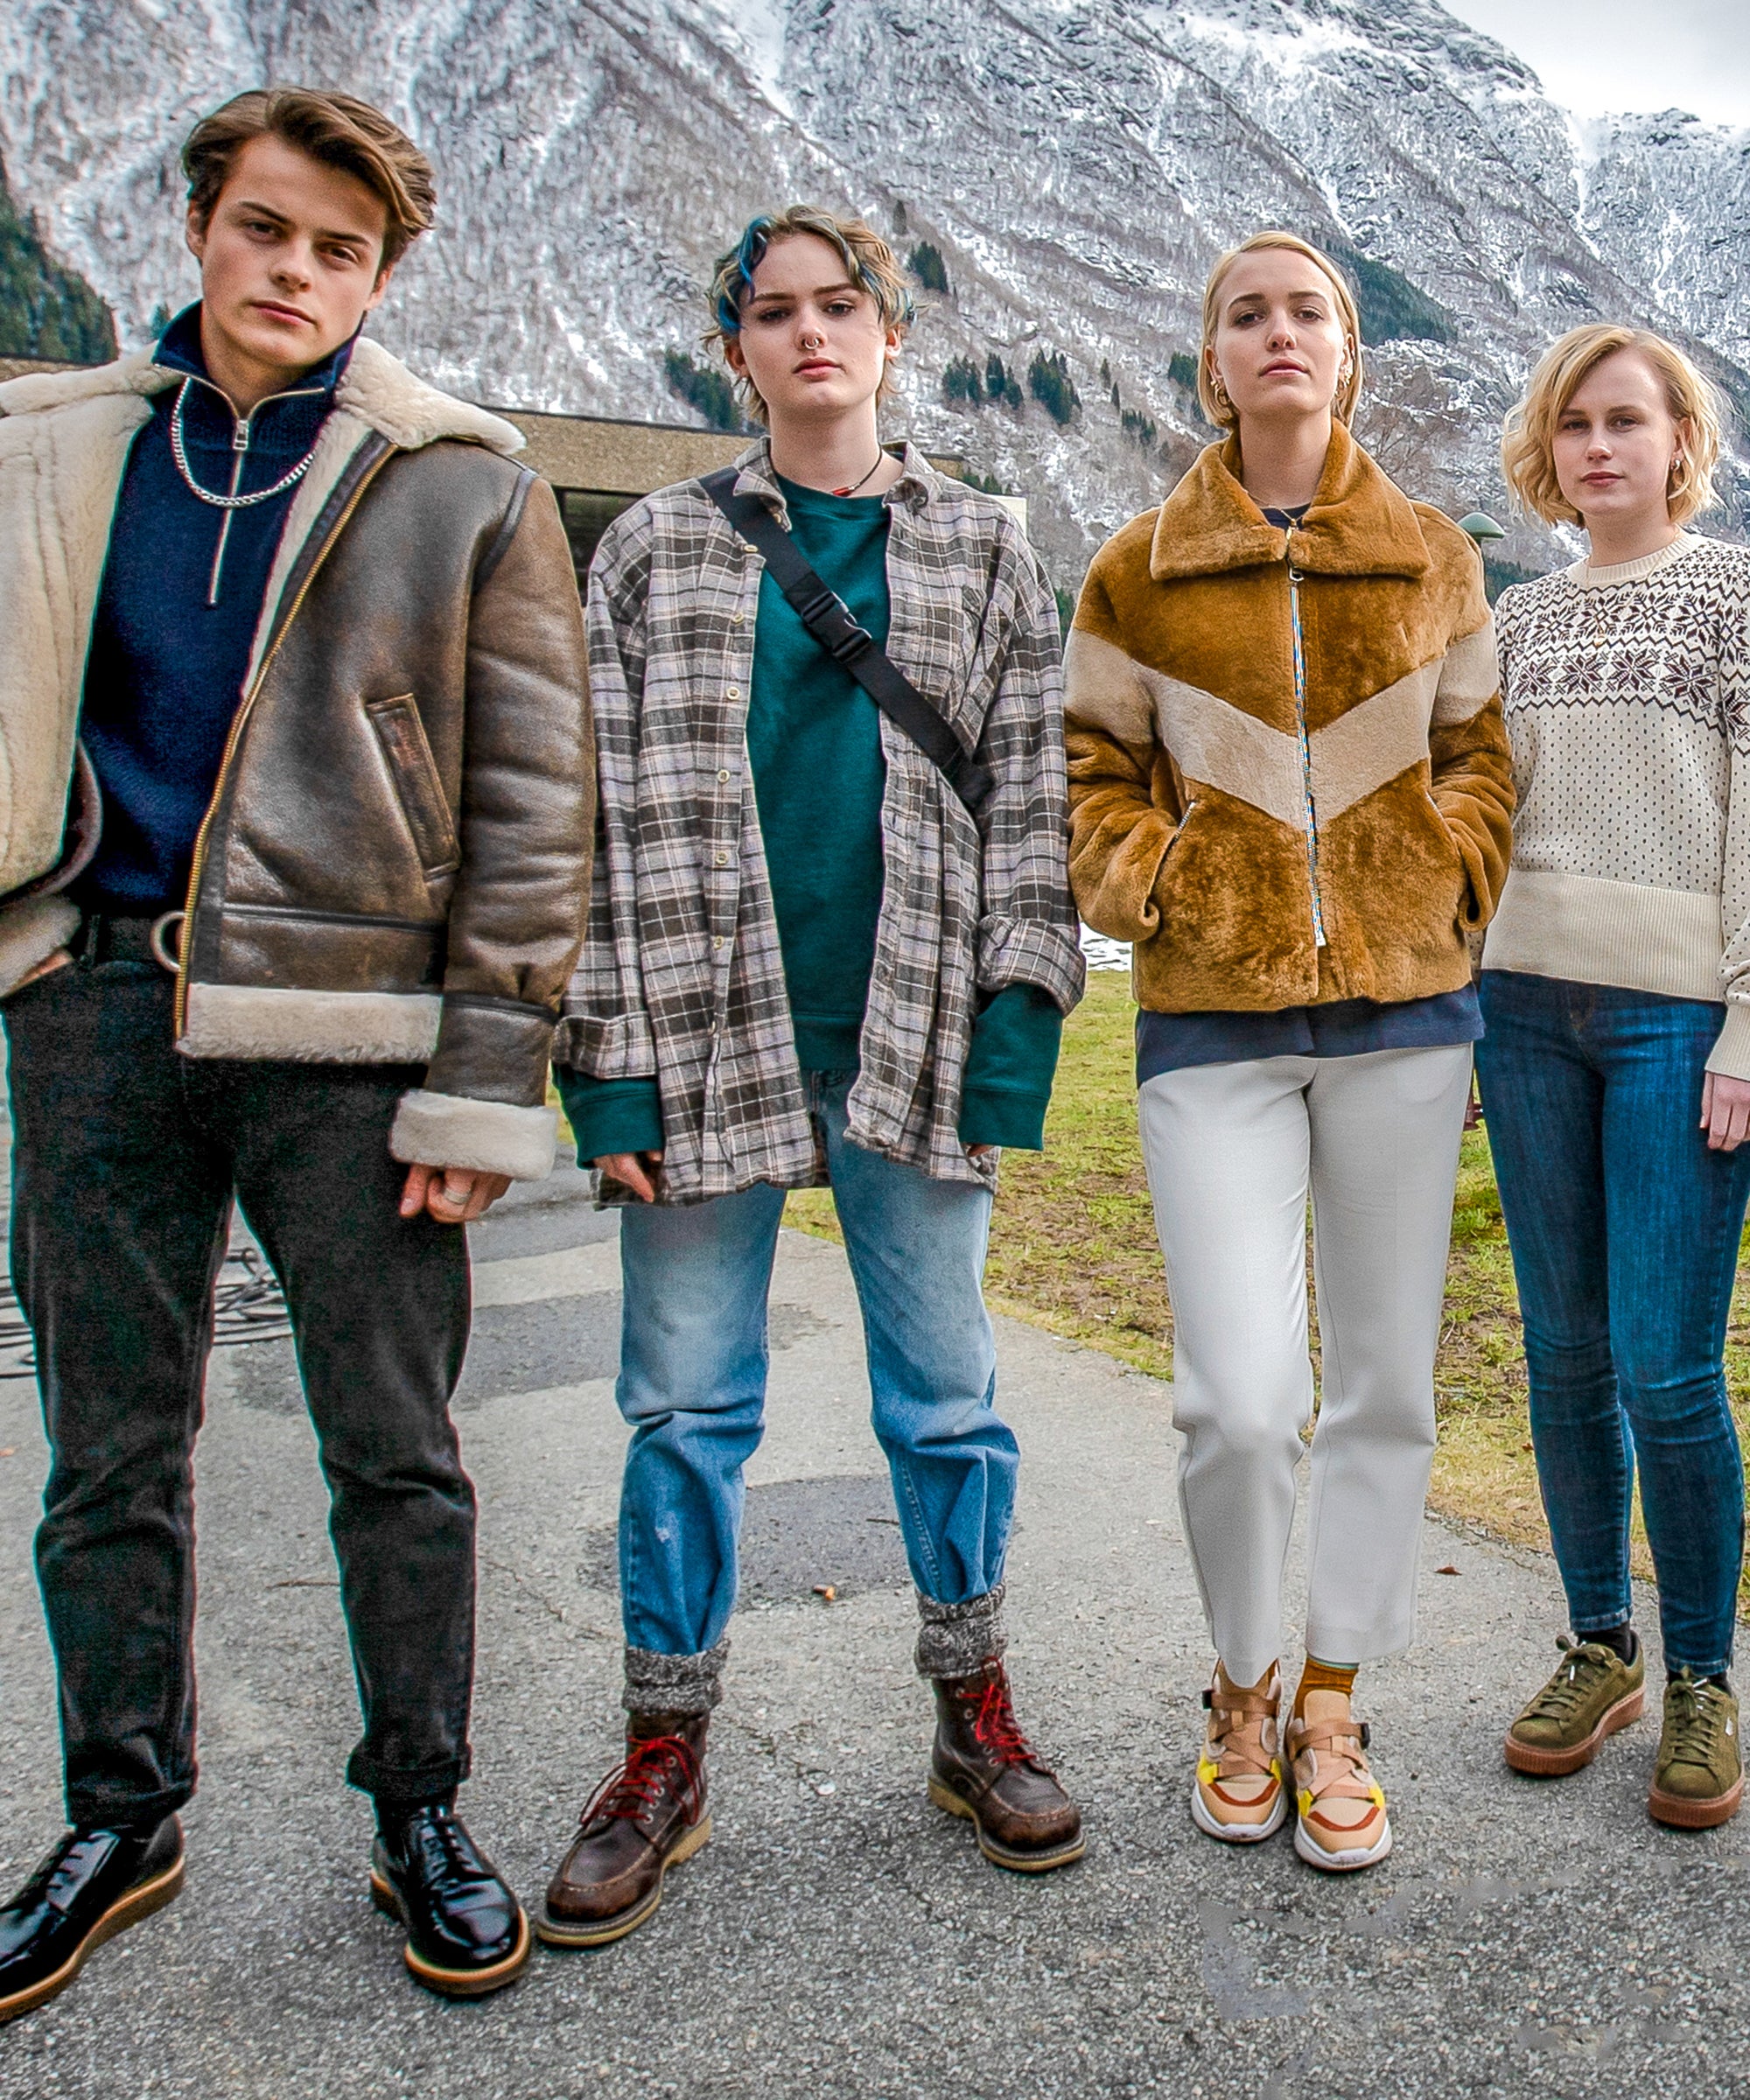 Ragnarok' on Netflix Cast: Who Stars in the Norwegian Series?